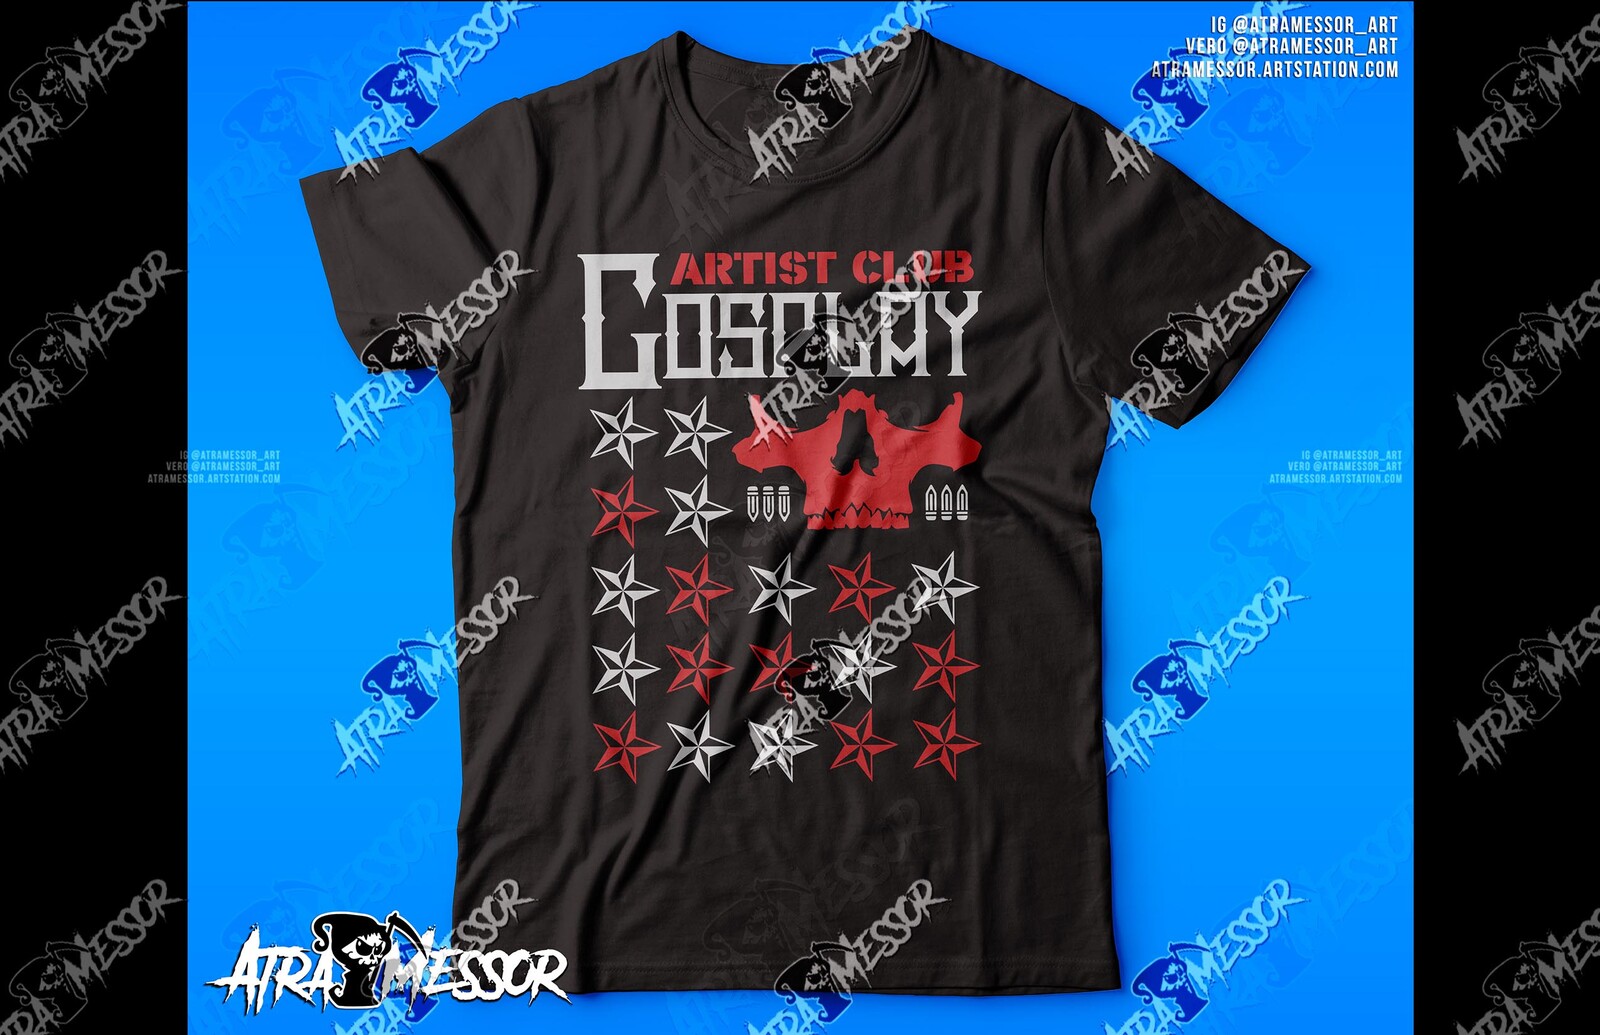 Artist Club "Cosplay Flag" (cosplay Edition)